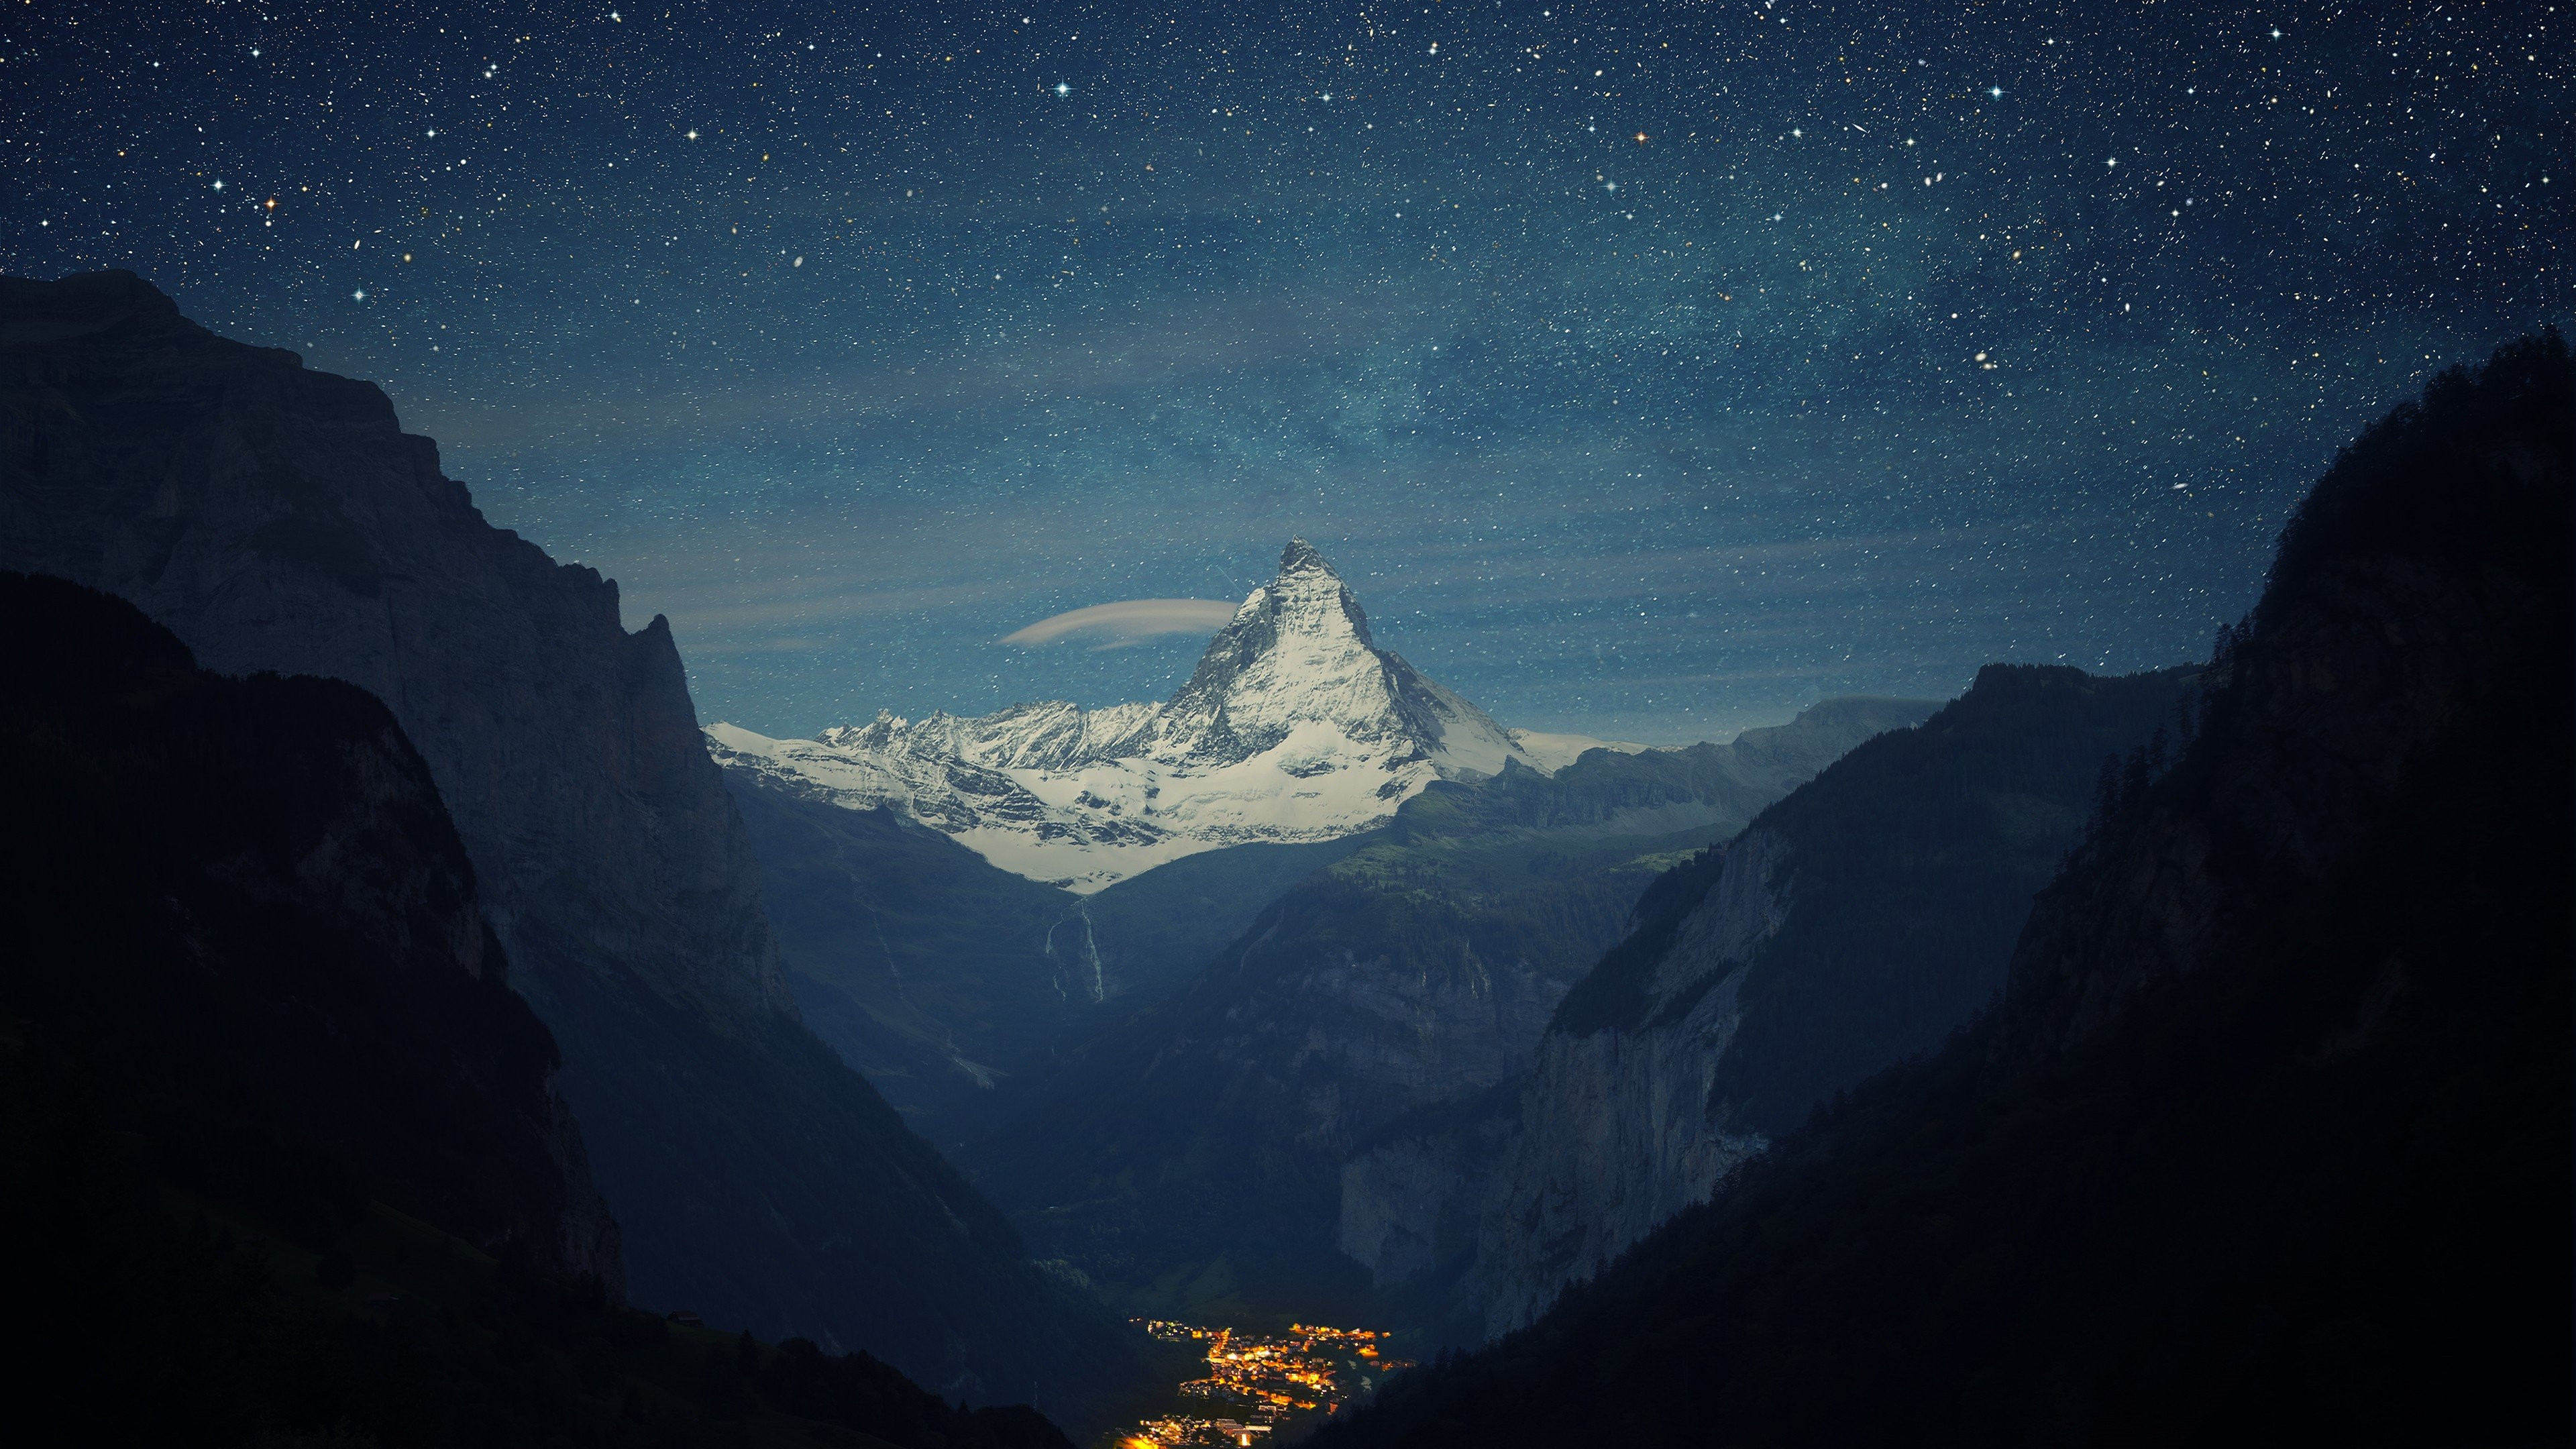 Wallpaper Switzerland 4k 5k Wallpaper Alps Mountains Stars Night